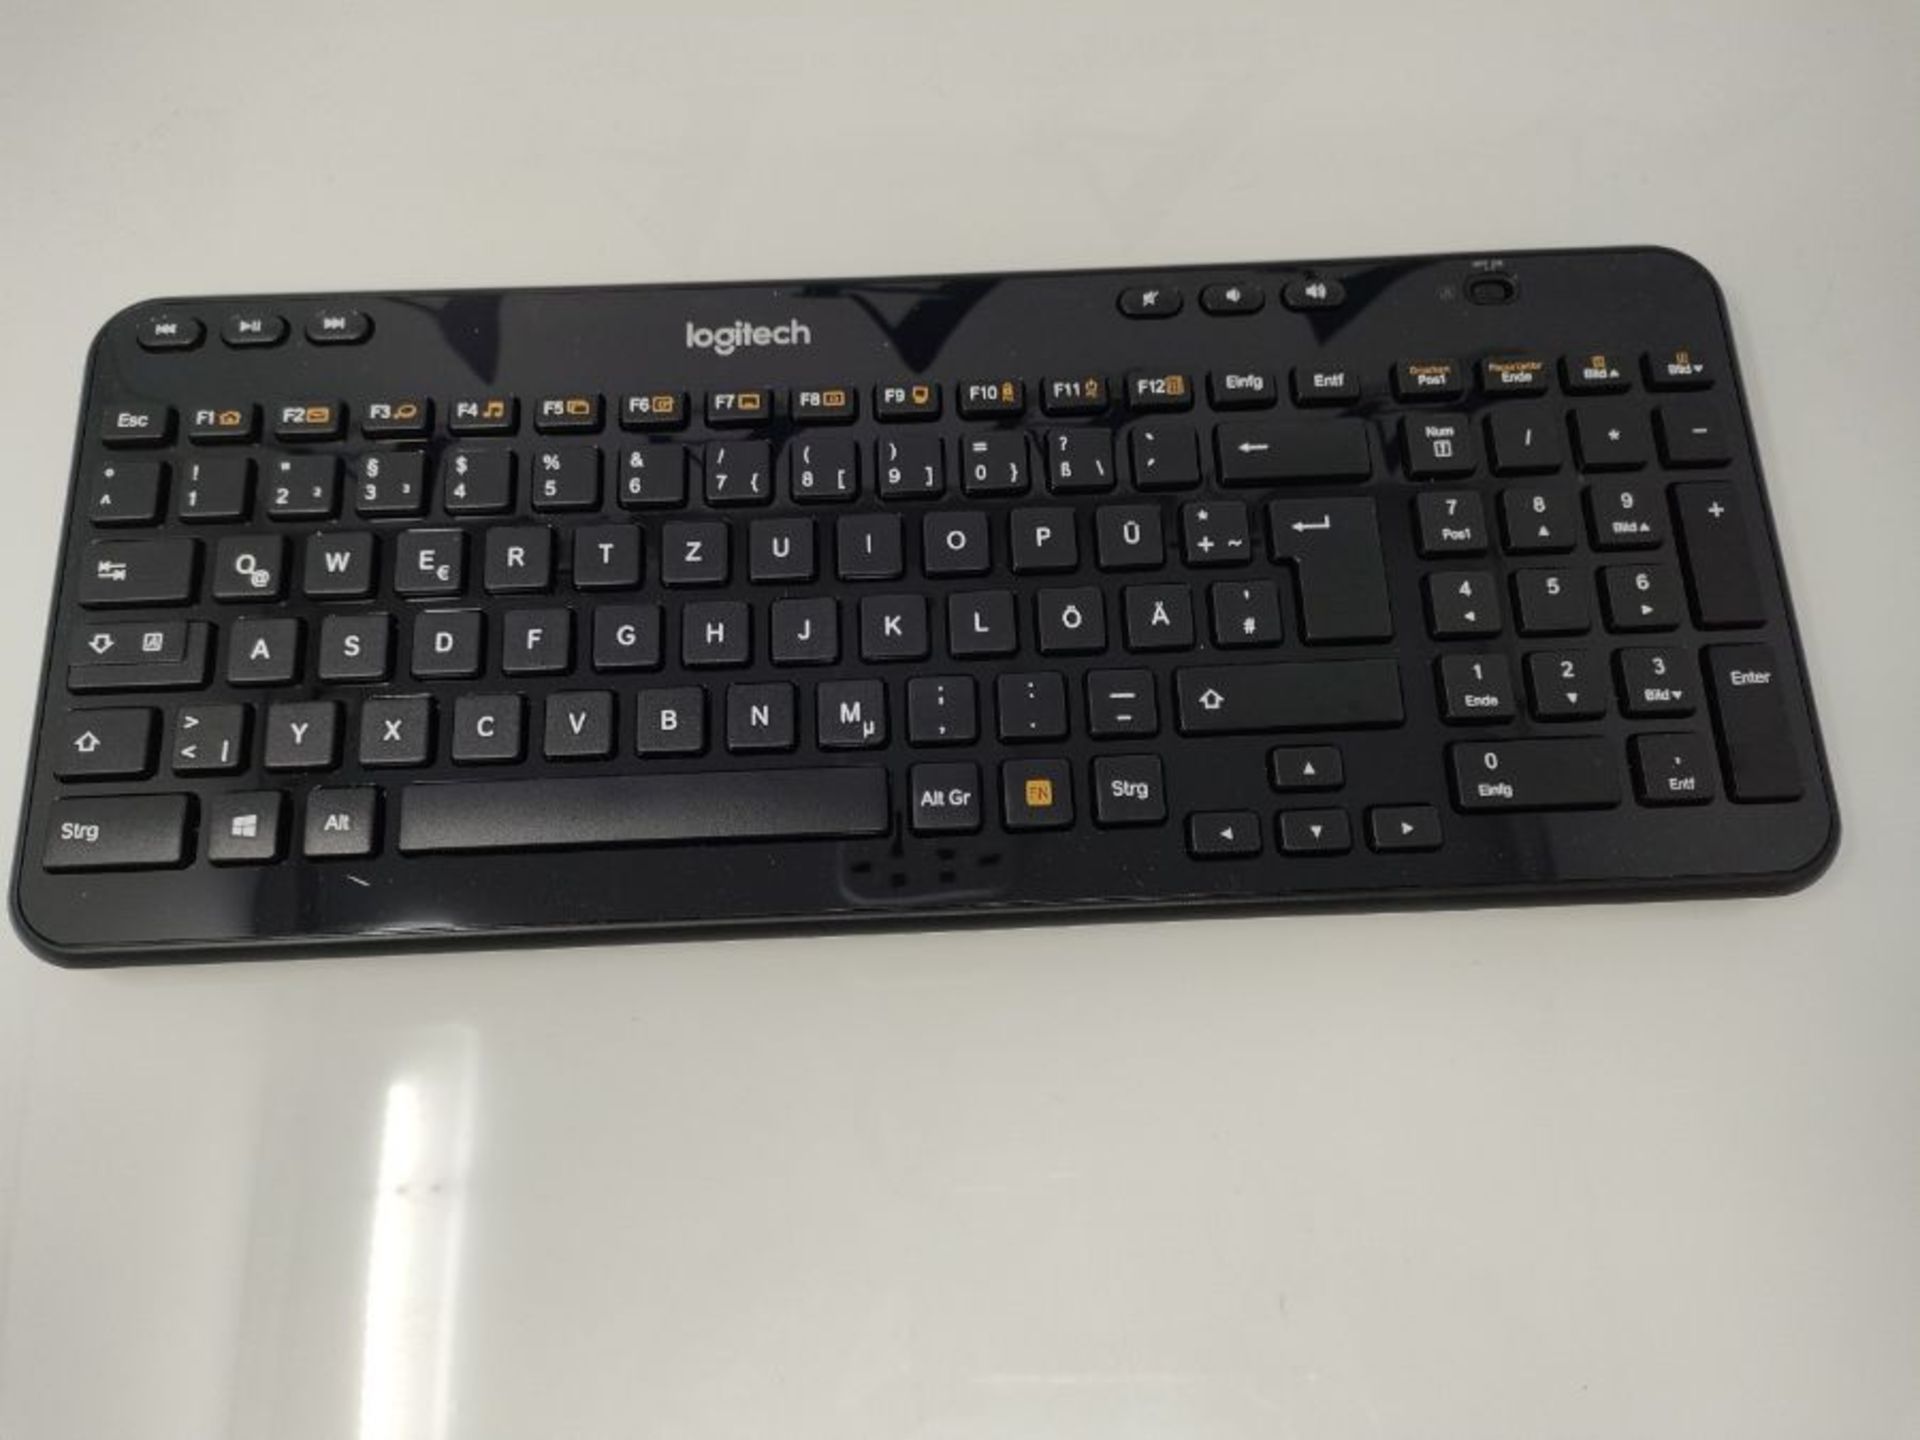 Logitech K360 Compact Wireless Keyboard for Windows, QWERTZ German Layout - Black - Image 3 of 3